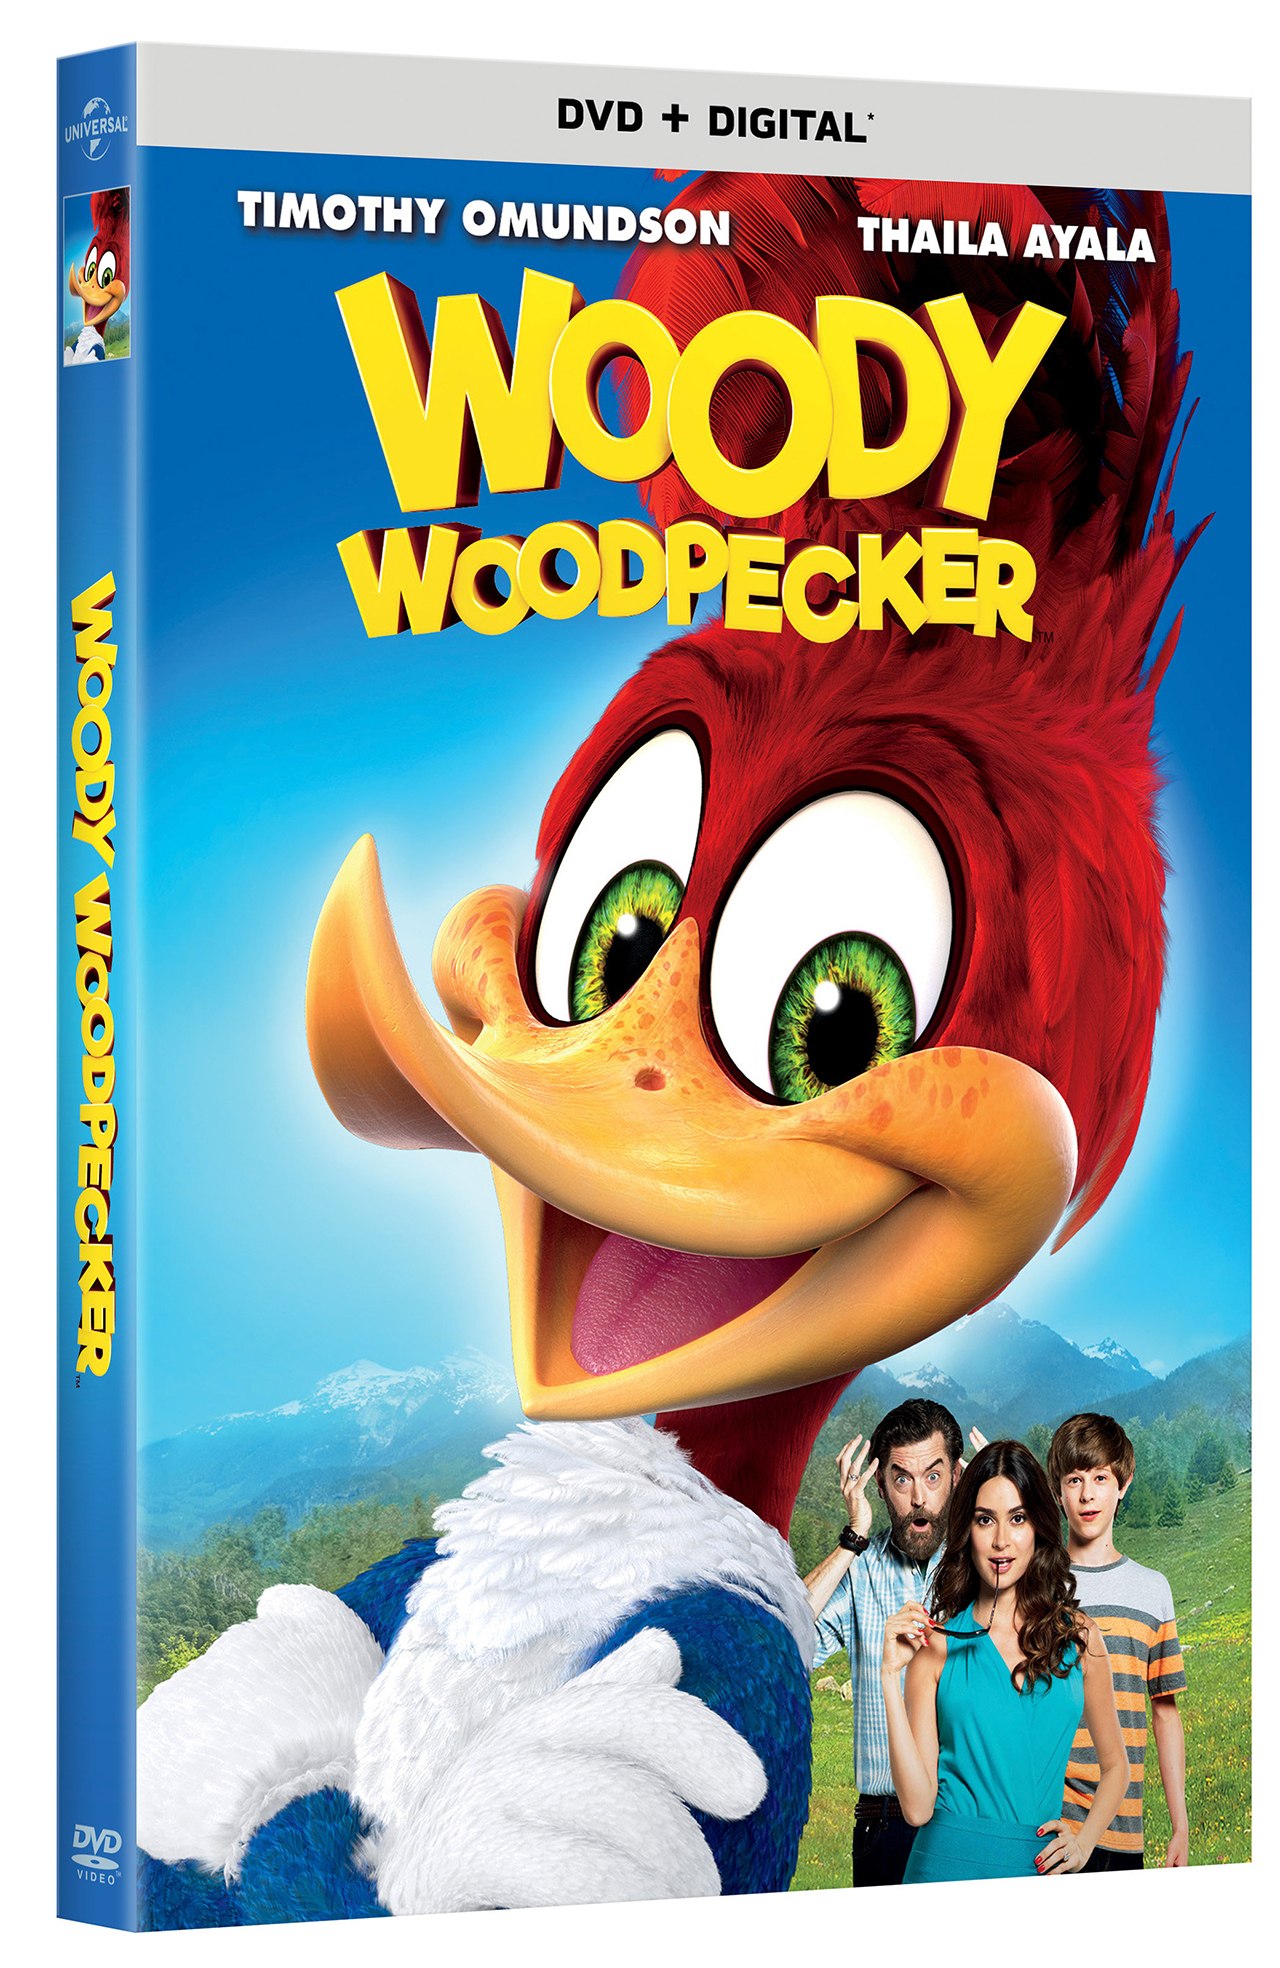 Best of Videos of woody woodpecker